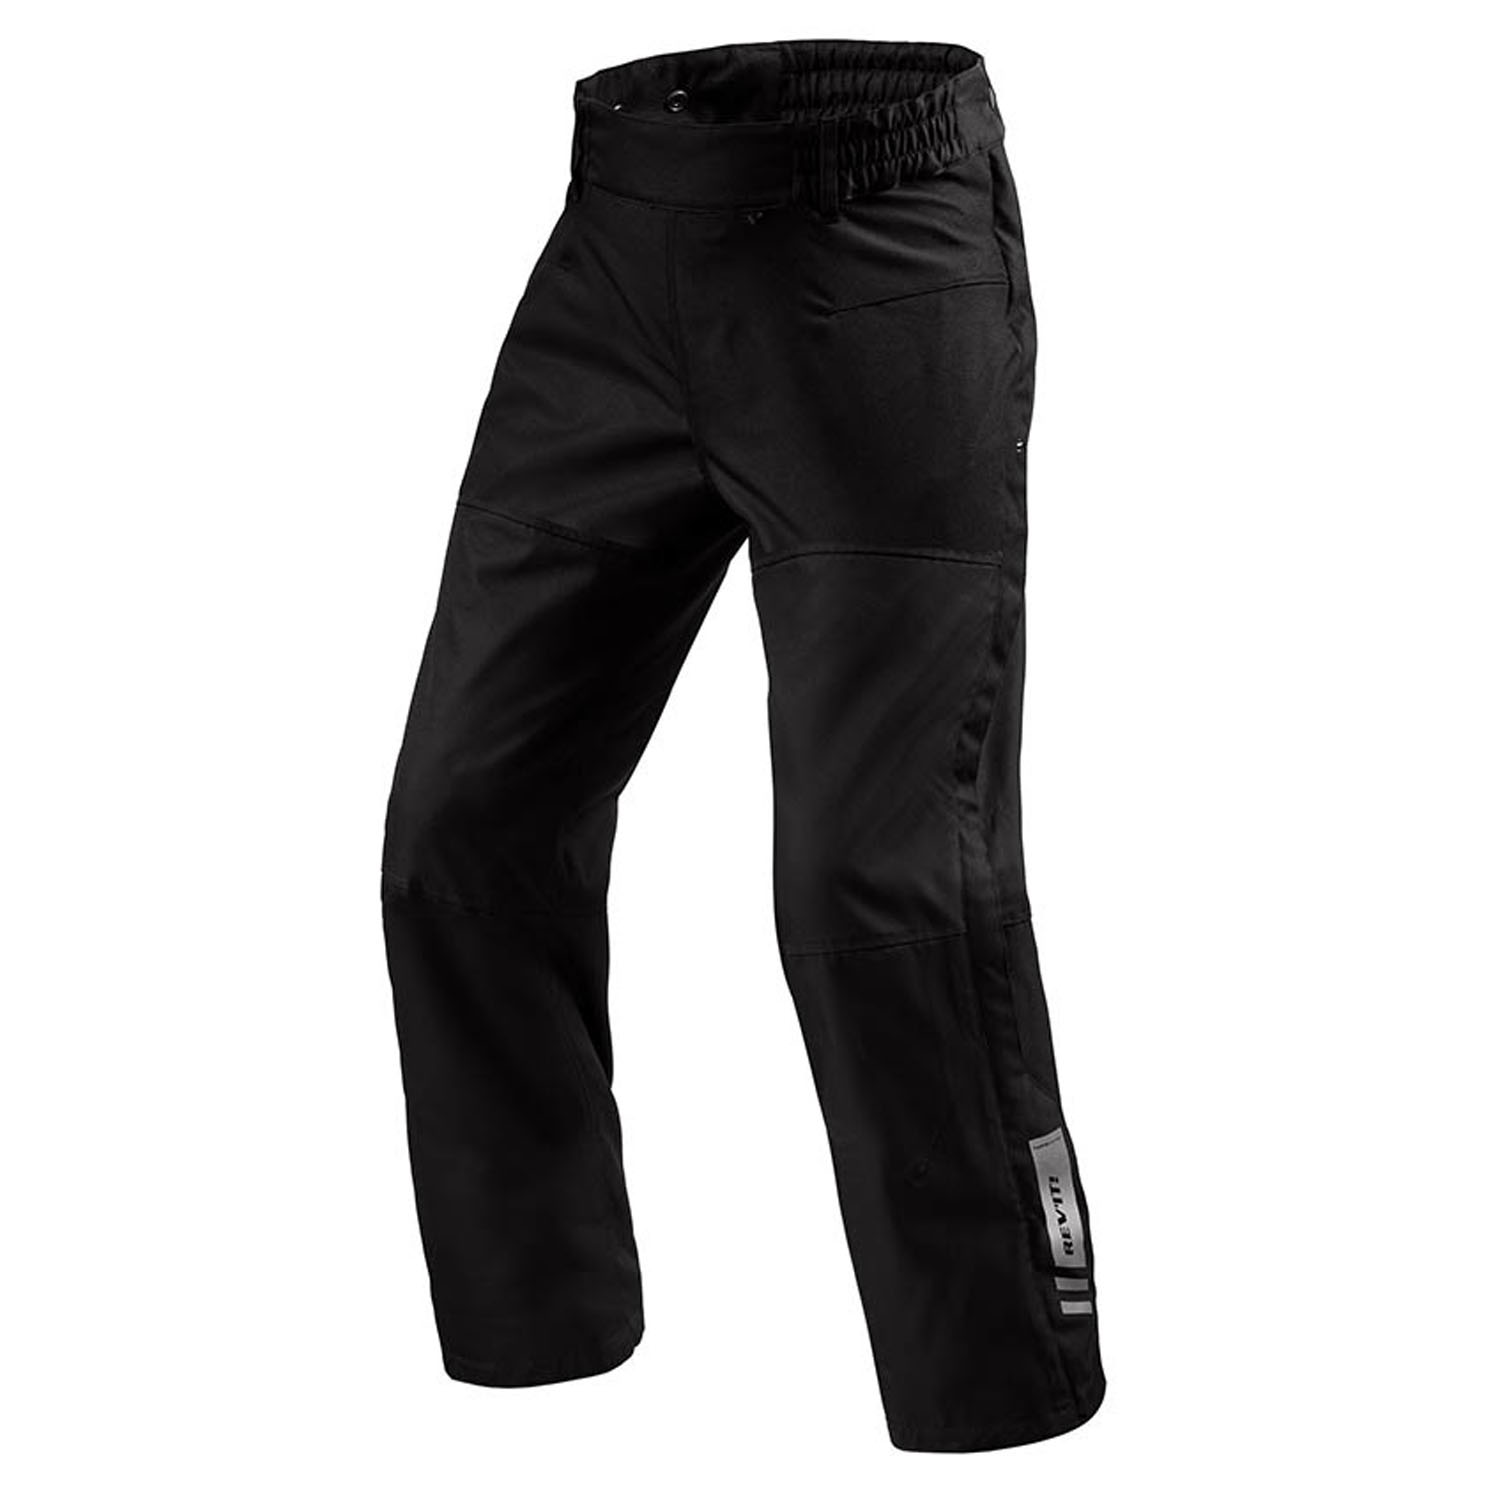 Image of REV'IT! Pants Axis 2 H2O Black Short Motorcycle Pants Größe 3XL